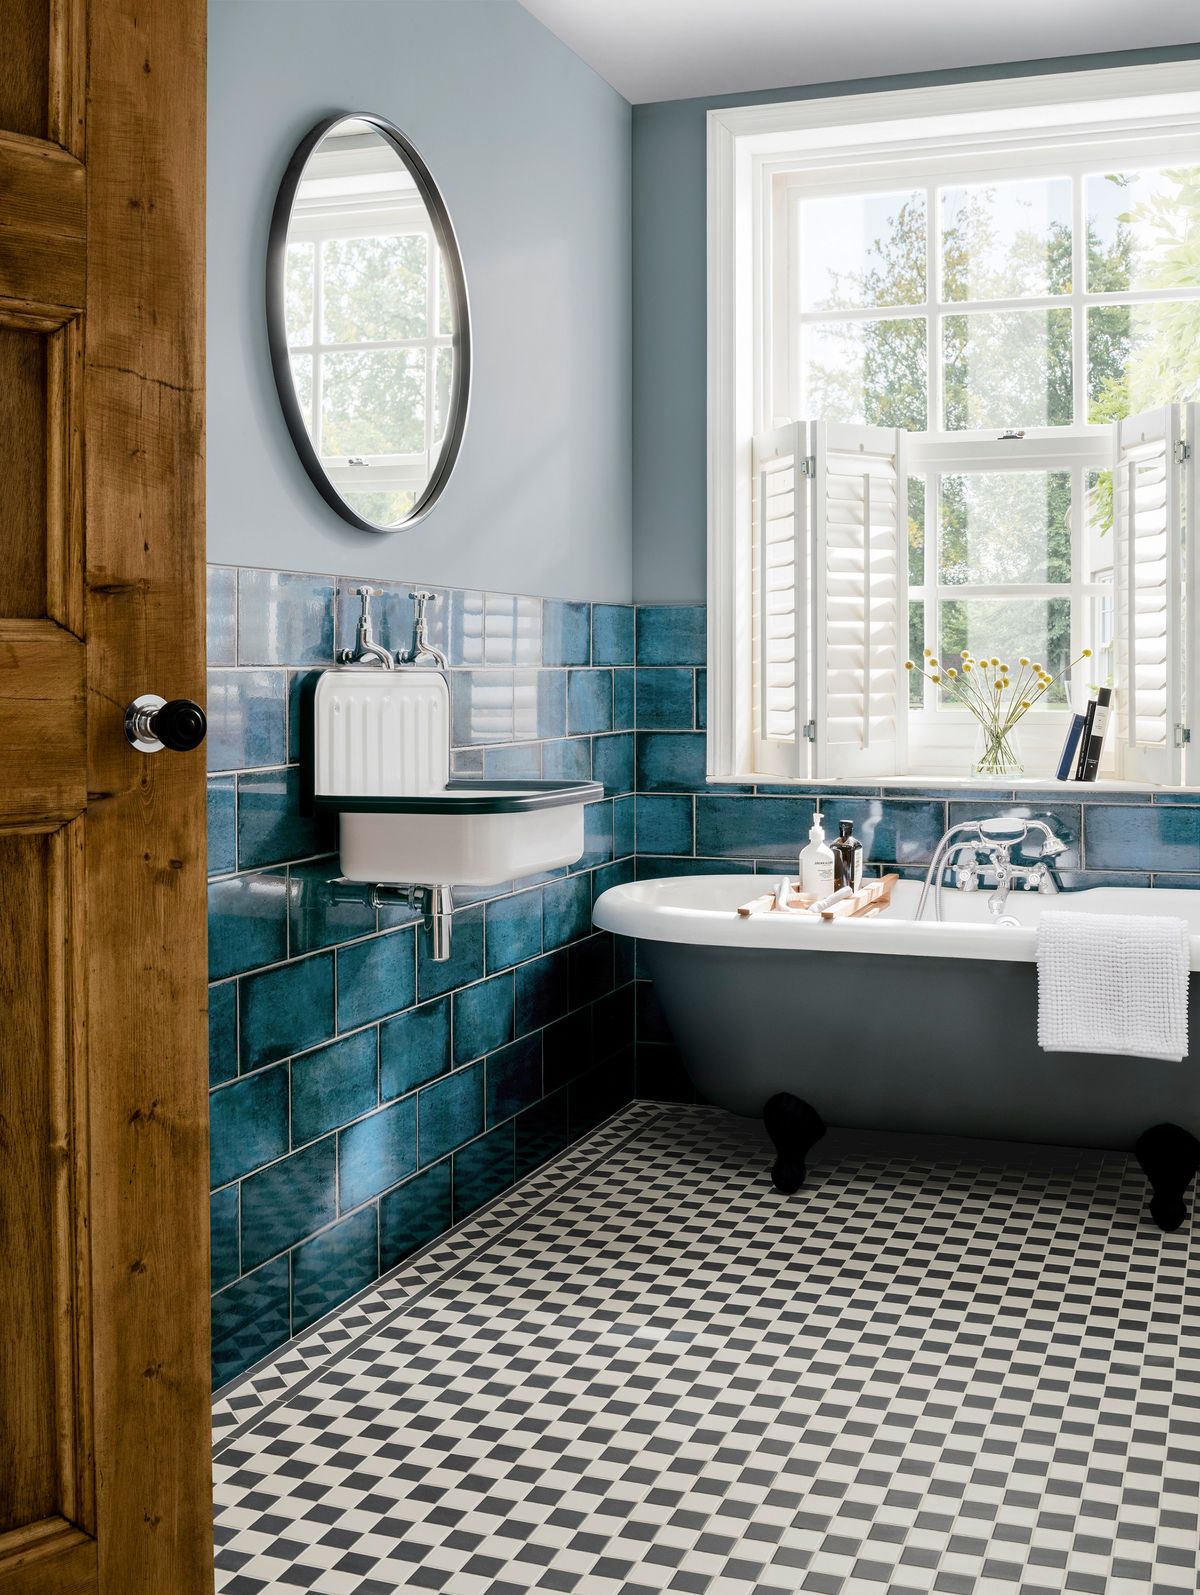 Bathroom floor tiles: 12 beautiful ideas to update your space - SrxJqBuYFVKeQ33JJrVznQ 1200 80